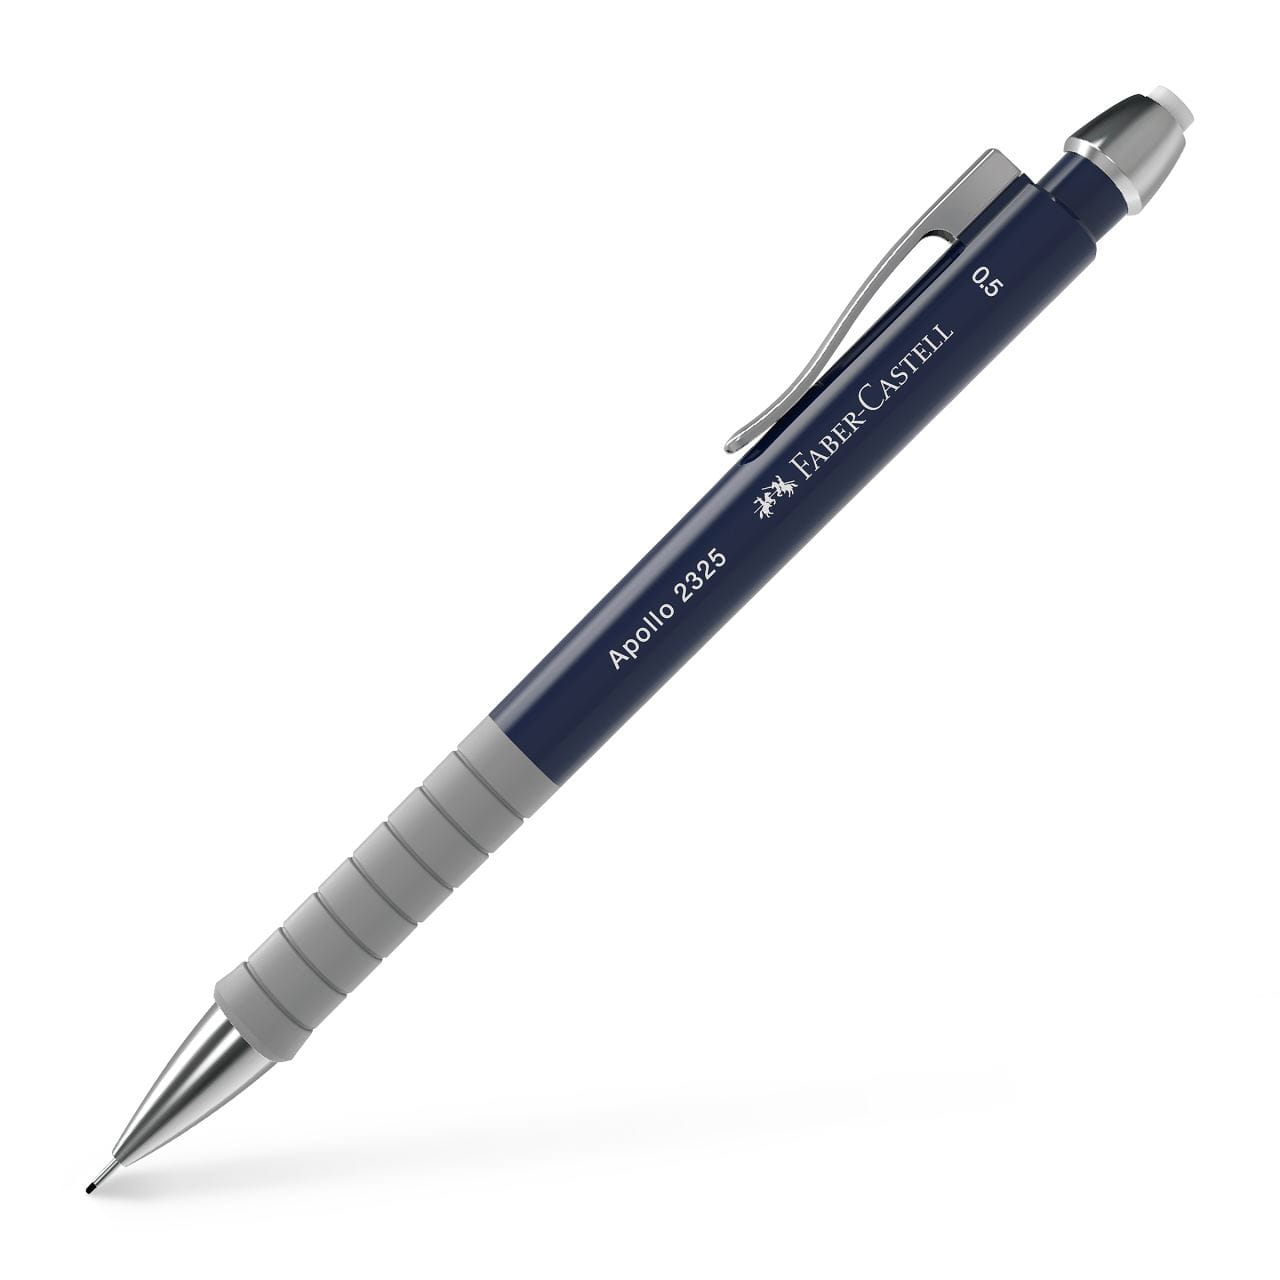 Faber-Castell - Apollo mechanical pencil, 0.5 mm, dark blue